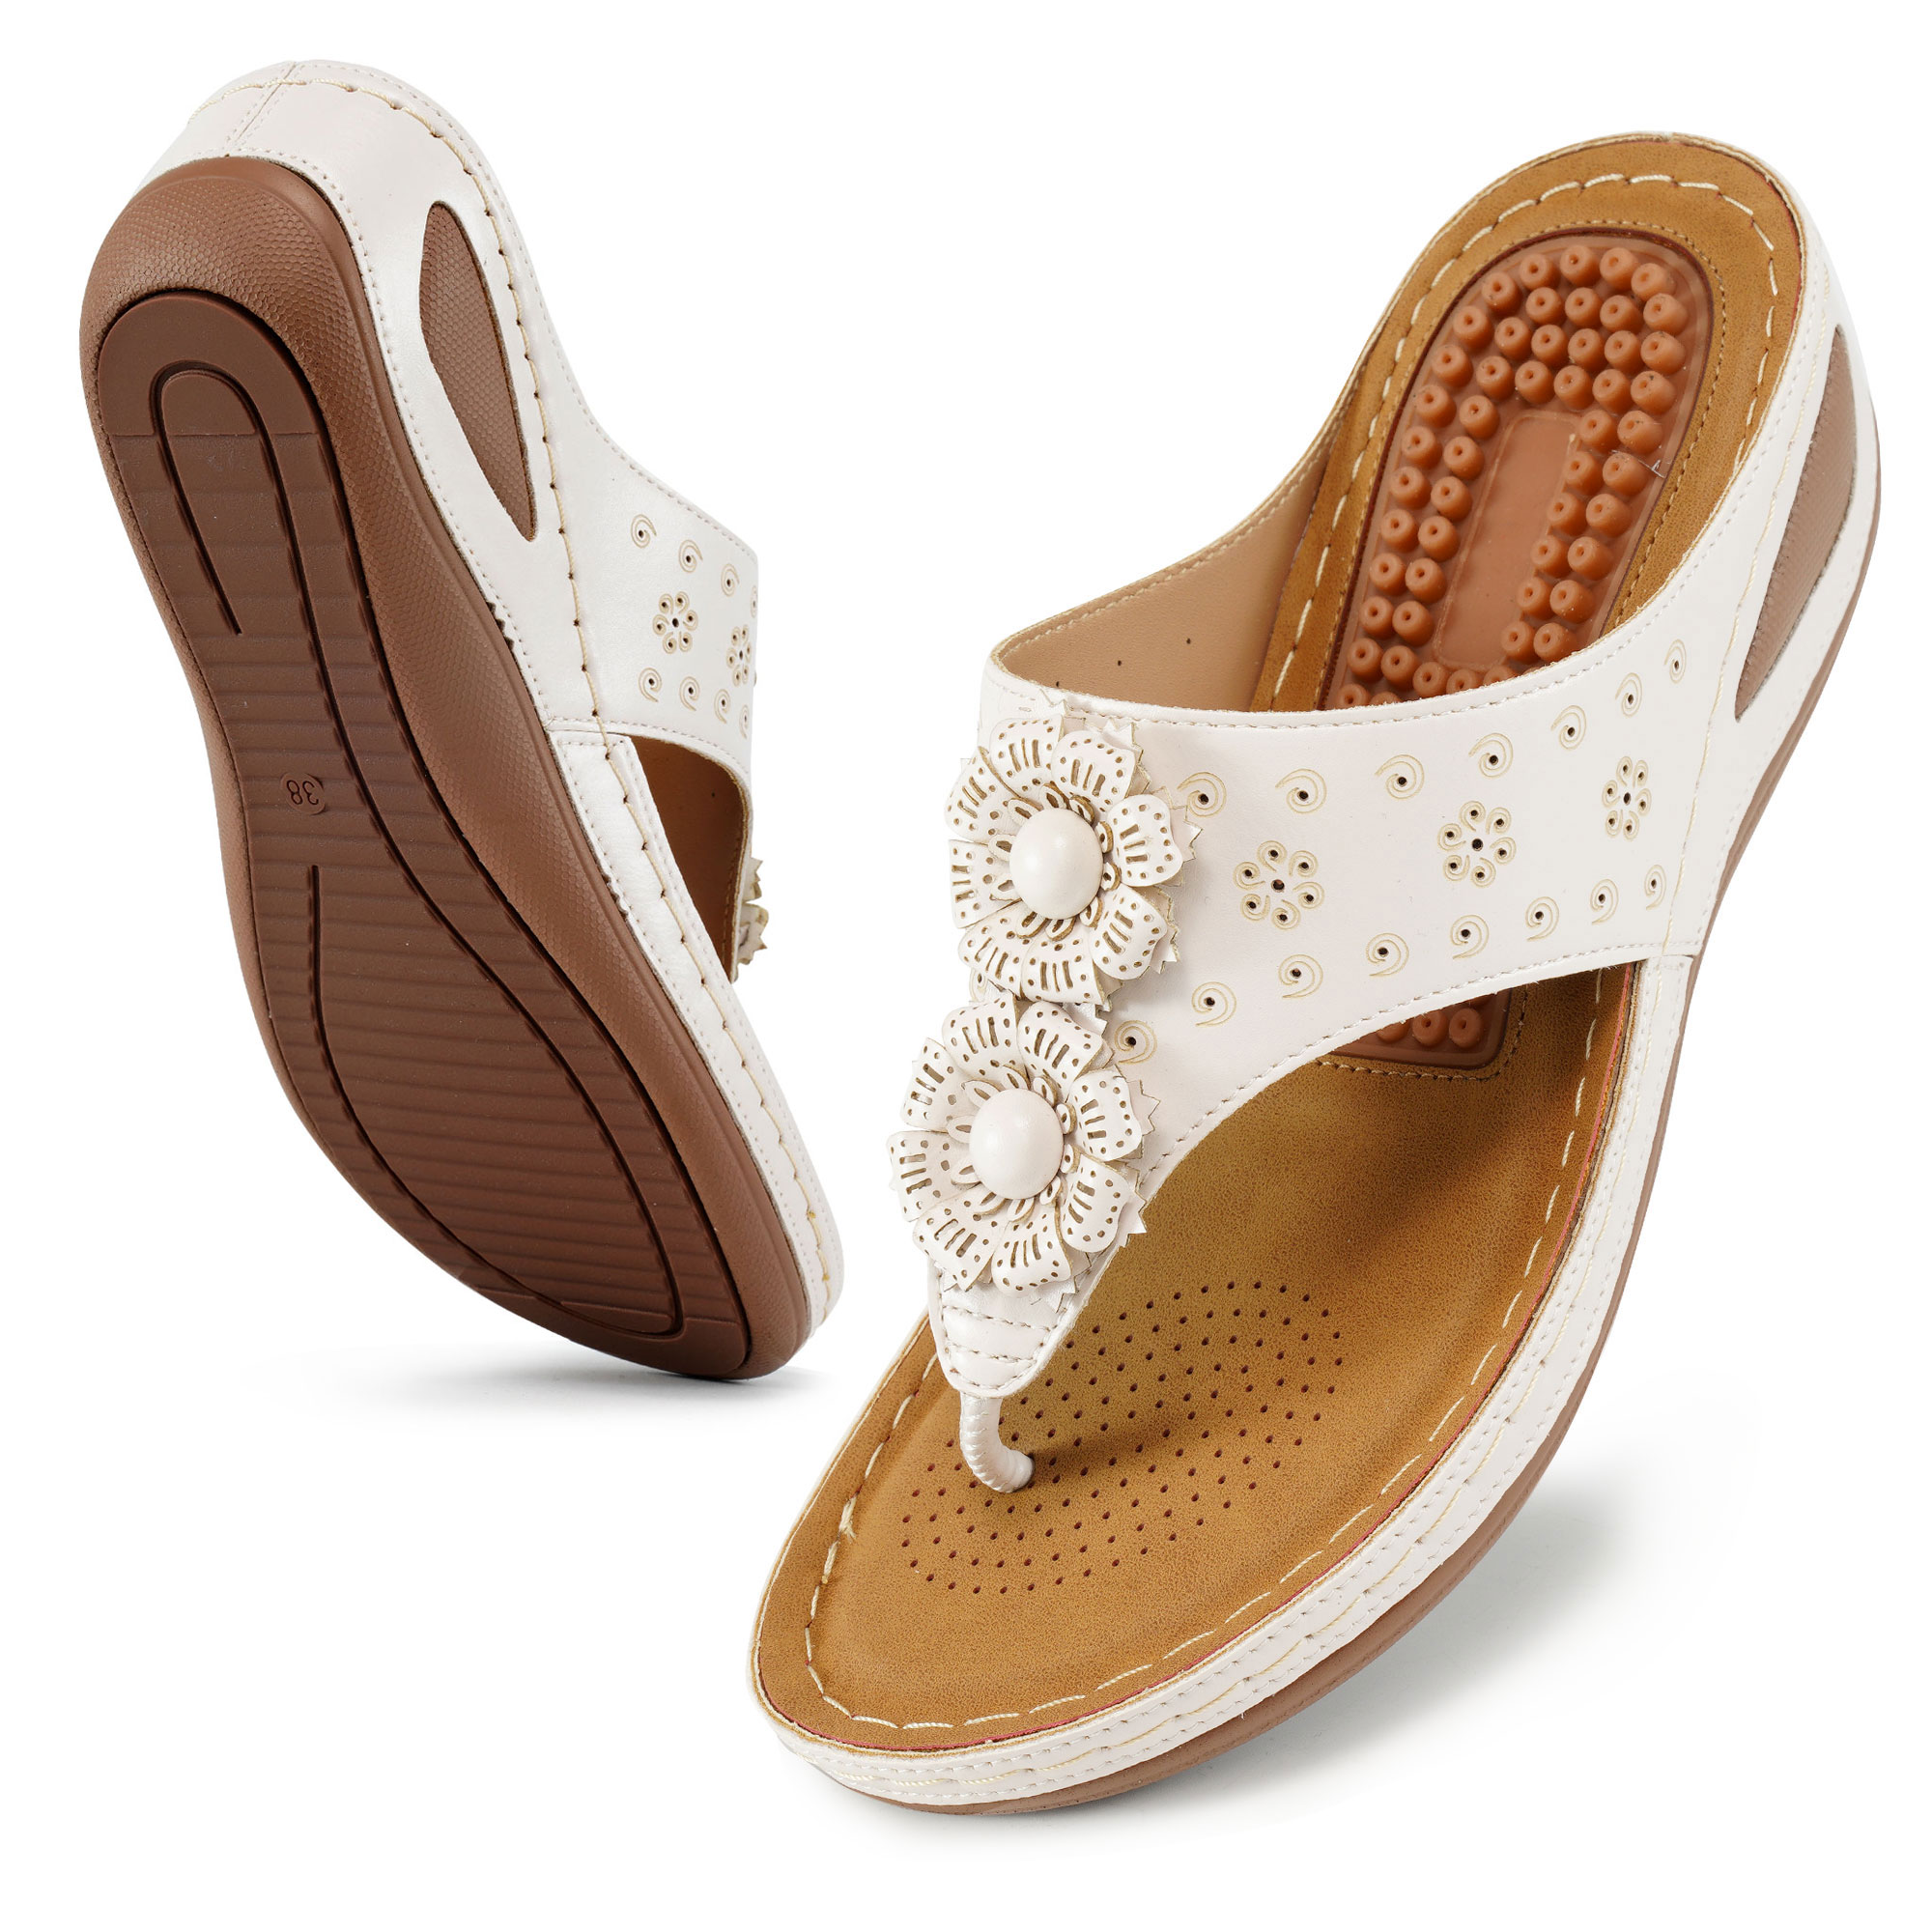 Ecetana Women Sandals Flip Flops for Women Summer Casual Wedge Sandals Shoes Massage Function - image 1 of 7